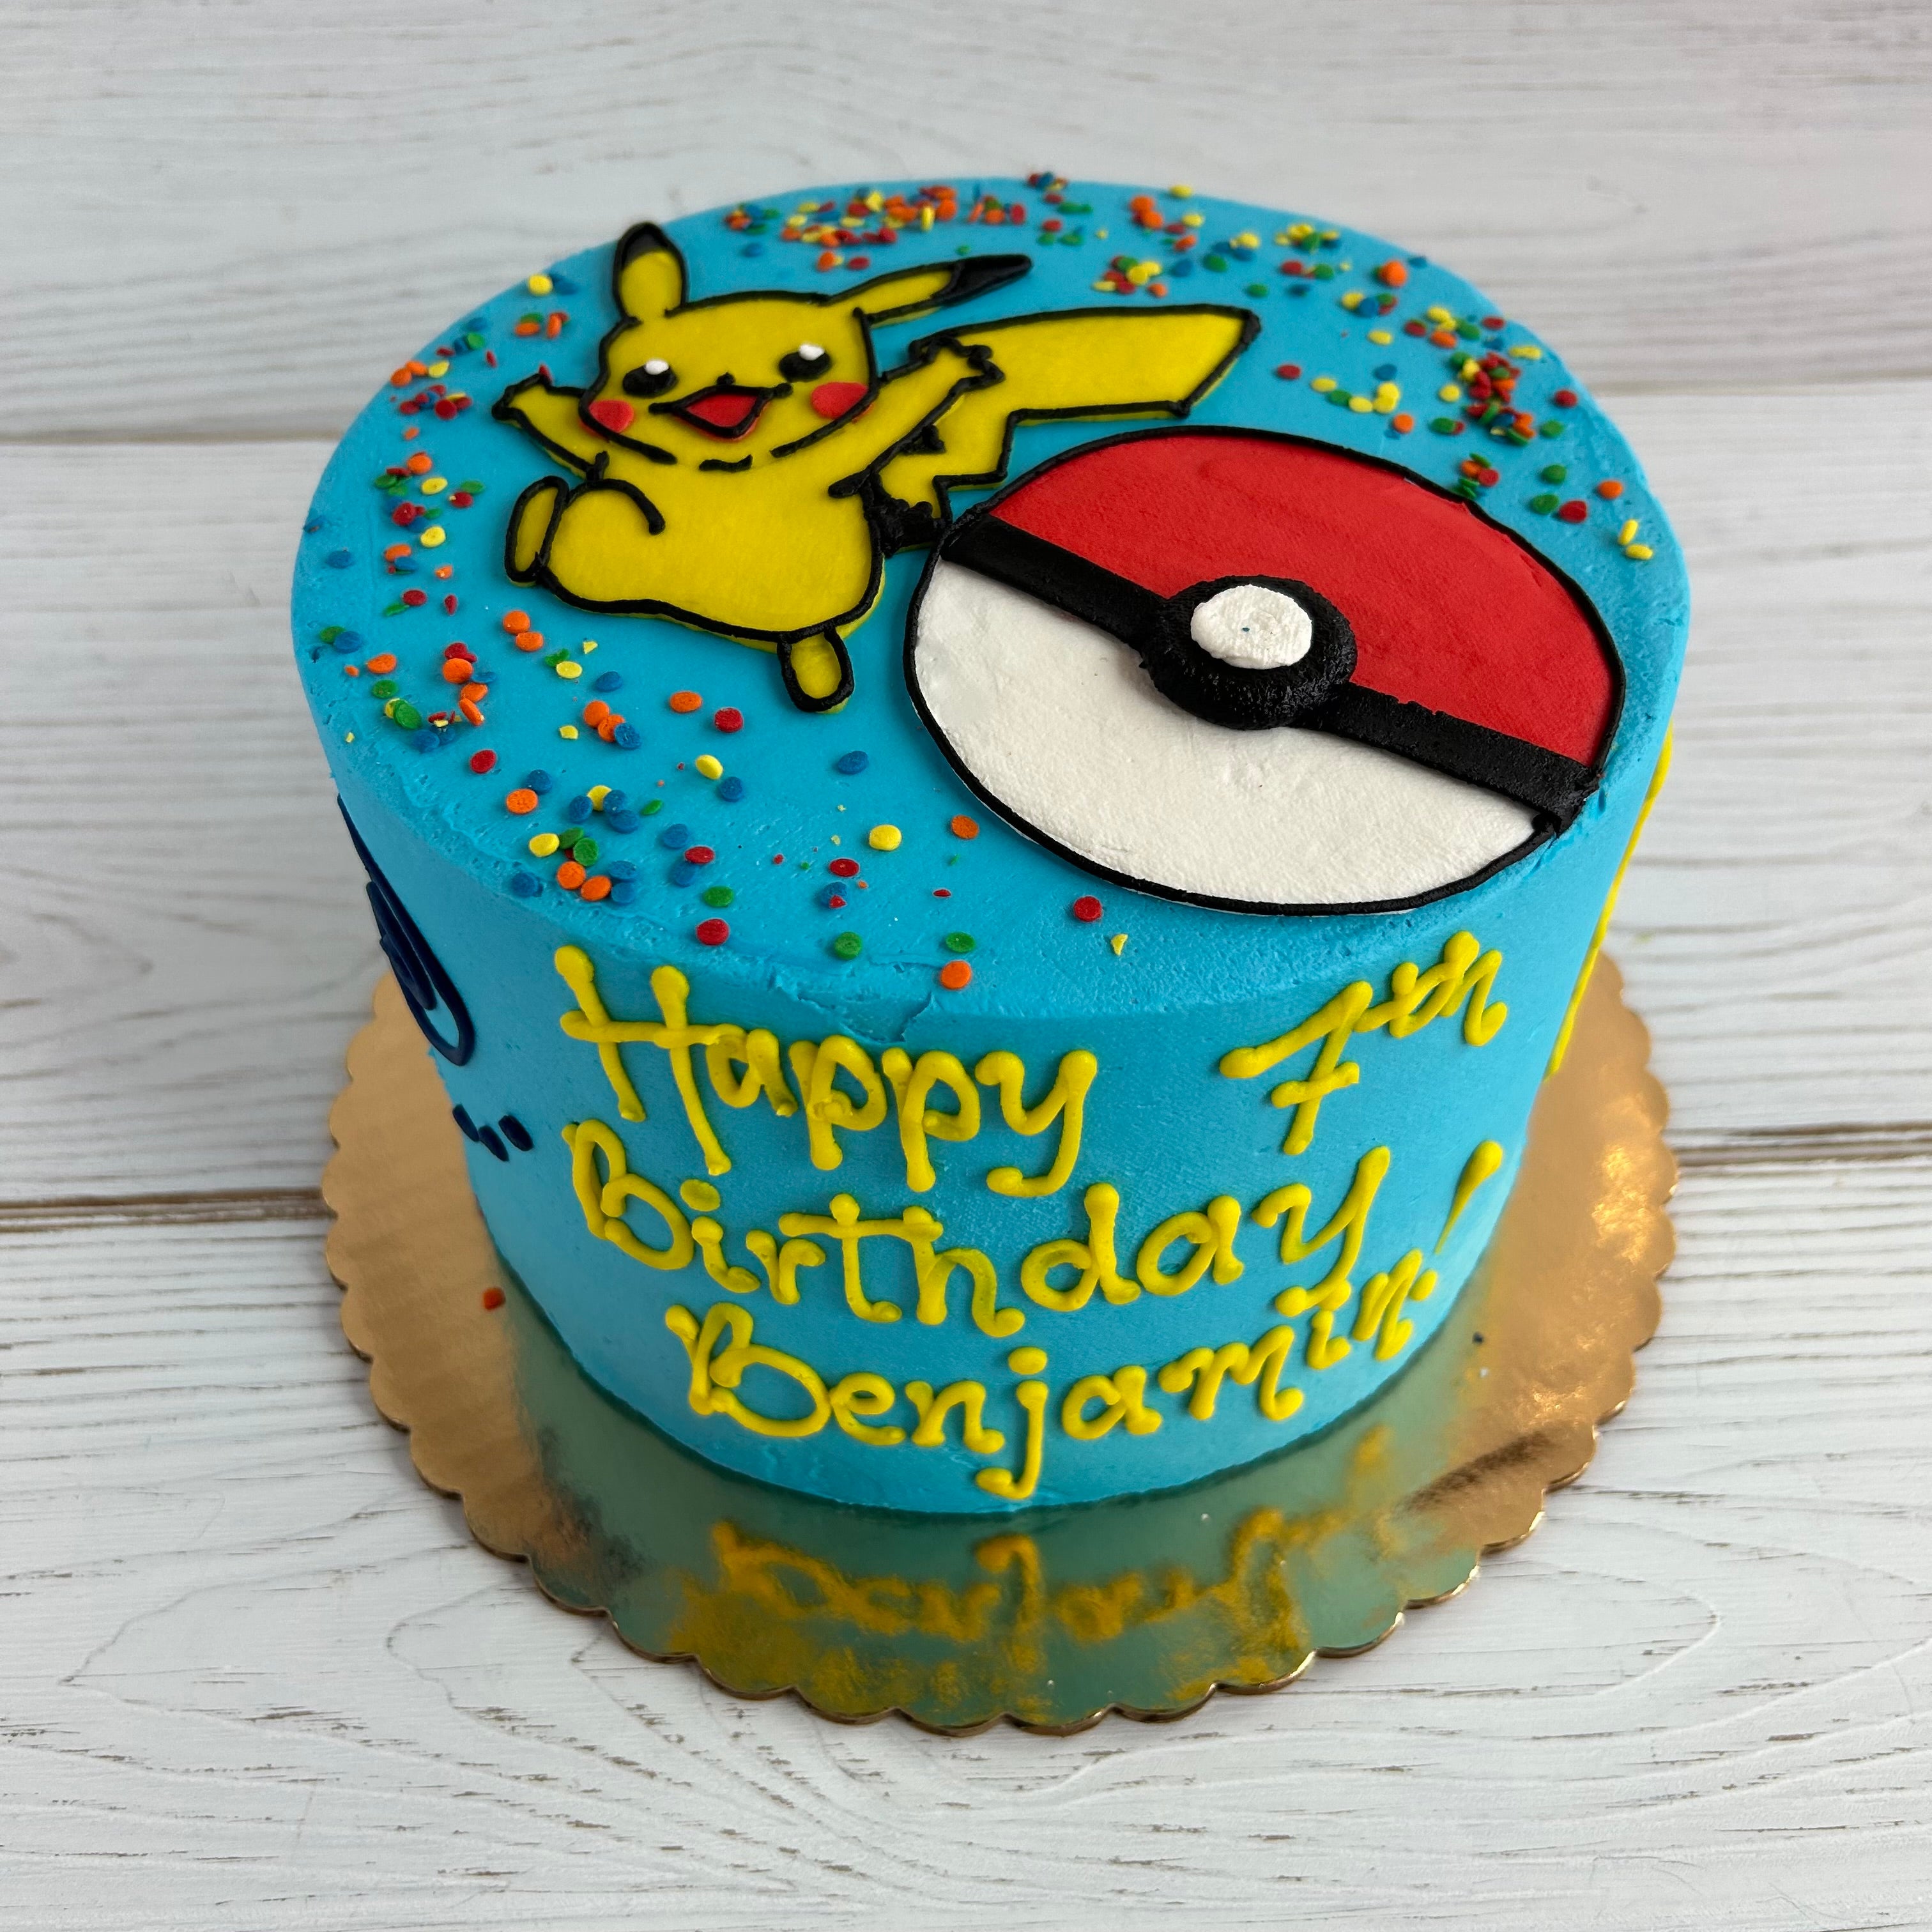 Pokemon Cake | Pokeball Cake | Pokemon Birthday Cake For Kids – Liliyum  Patisserie & Cafe